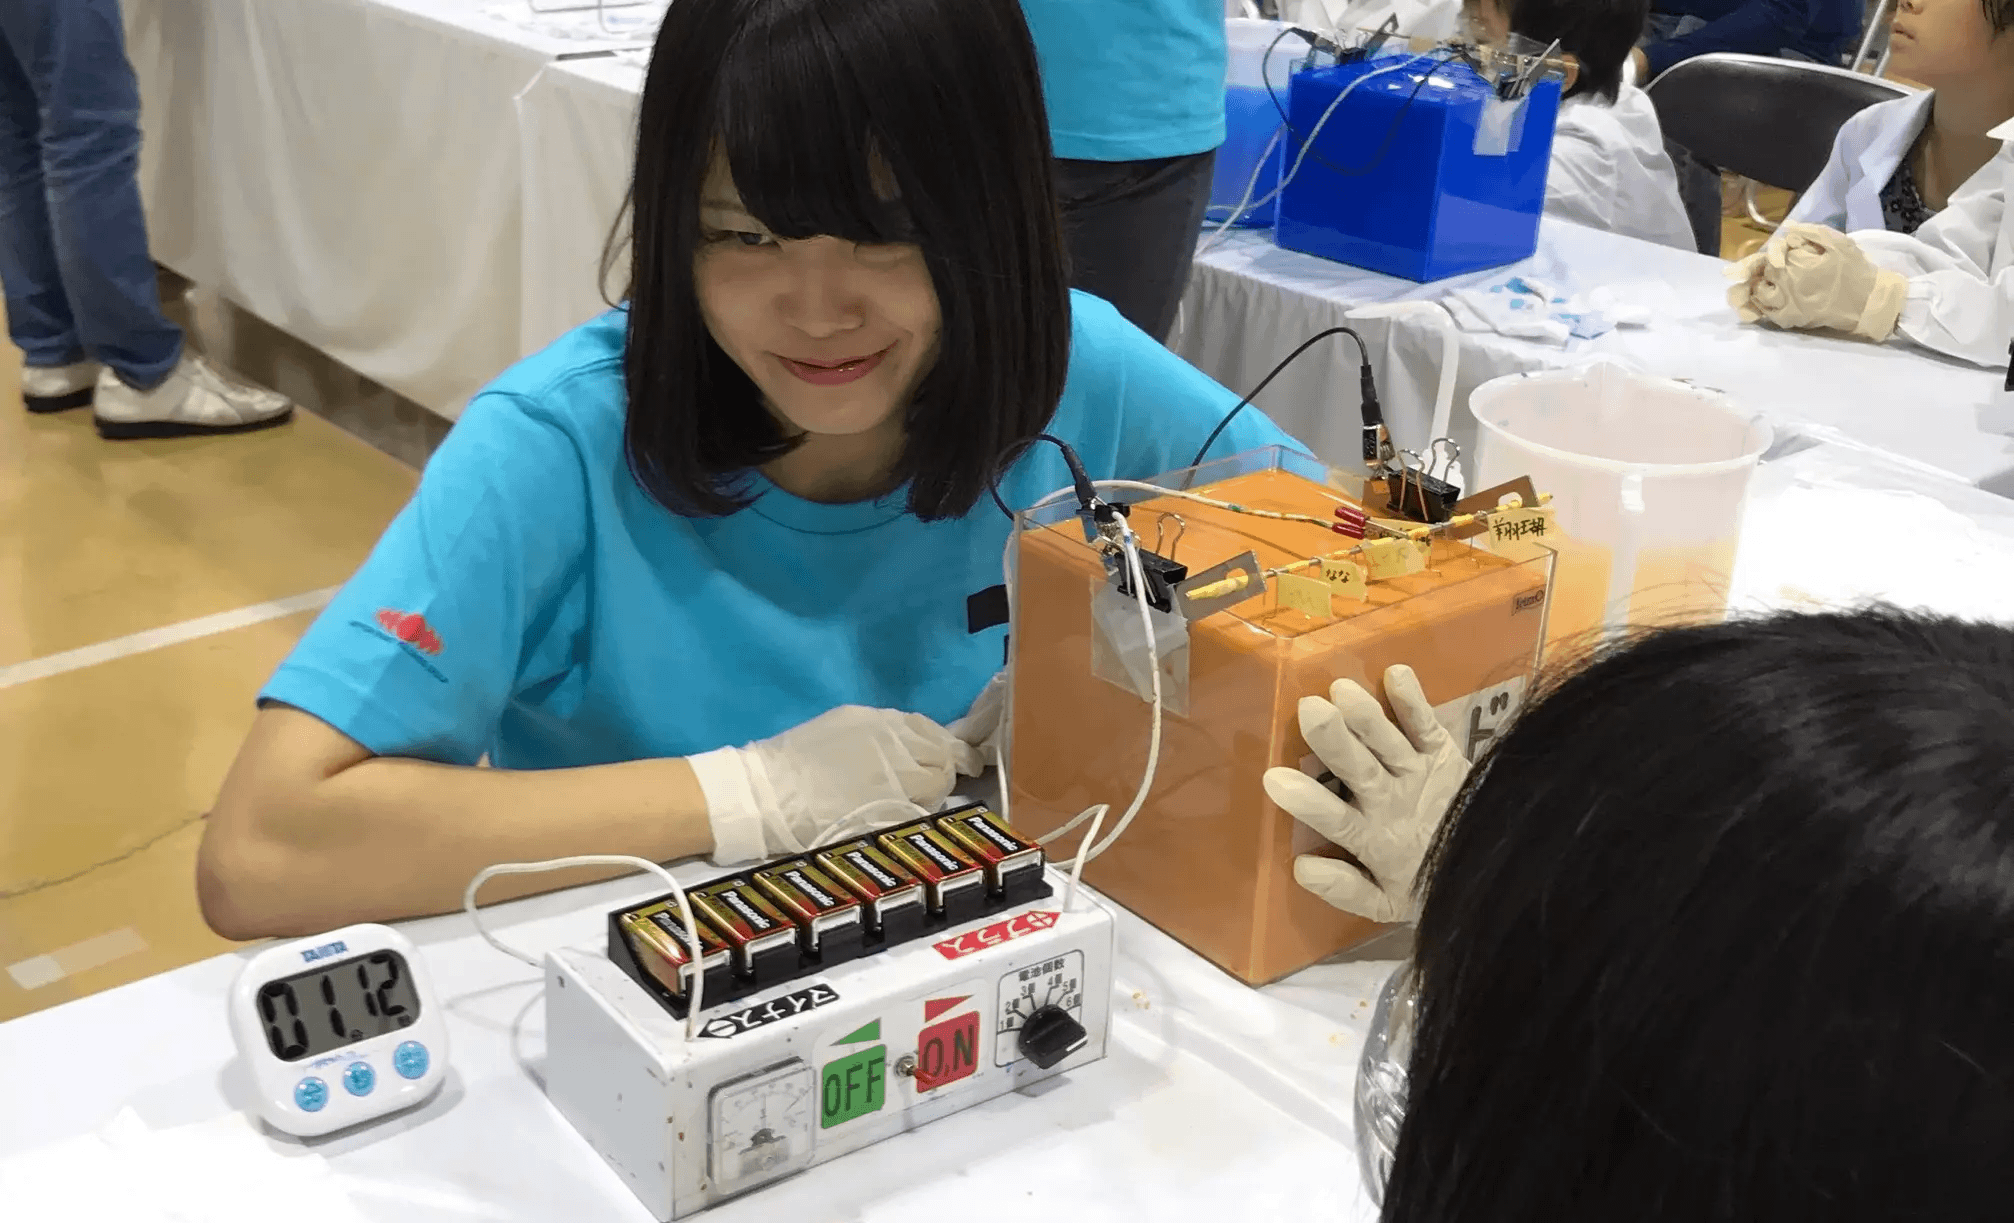 Employee volunteers explaining electrodeposition coating to children